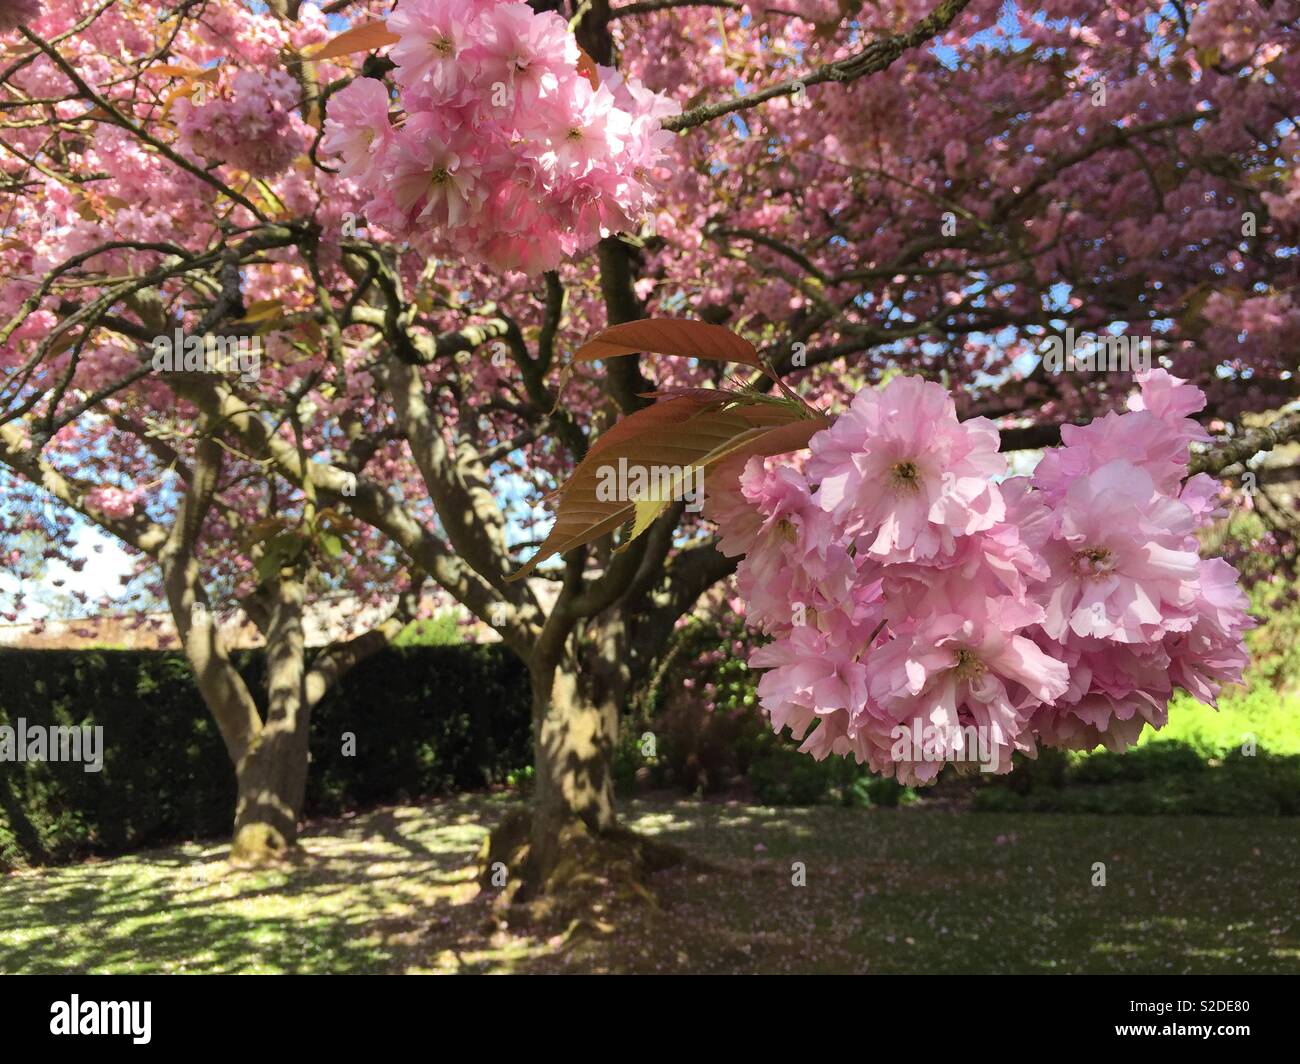 Pink Cherry blossom on cherry trees in springtime dappled sunshine Stock Photo